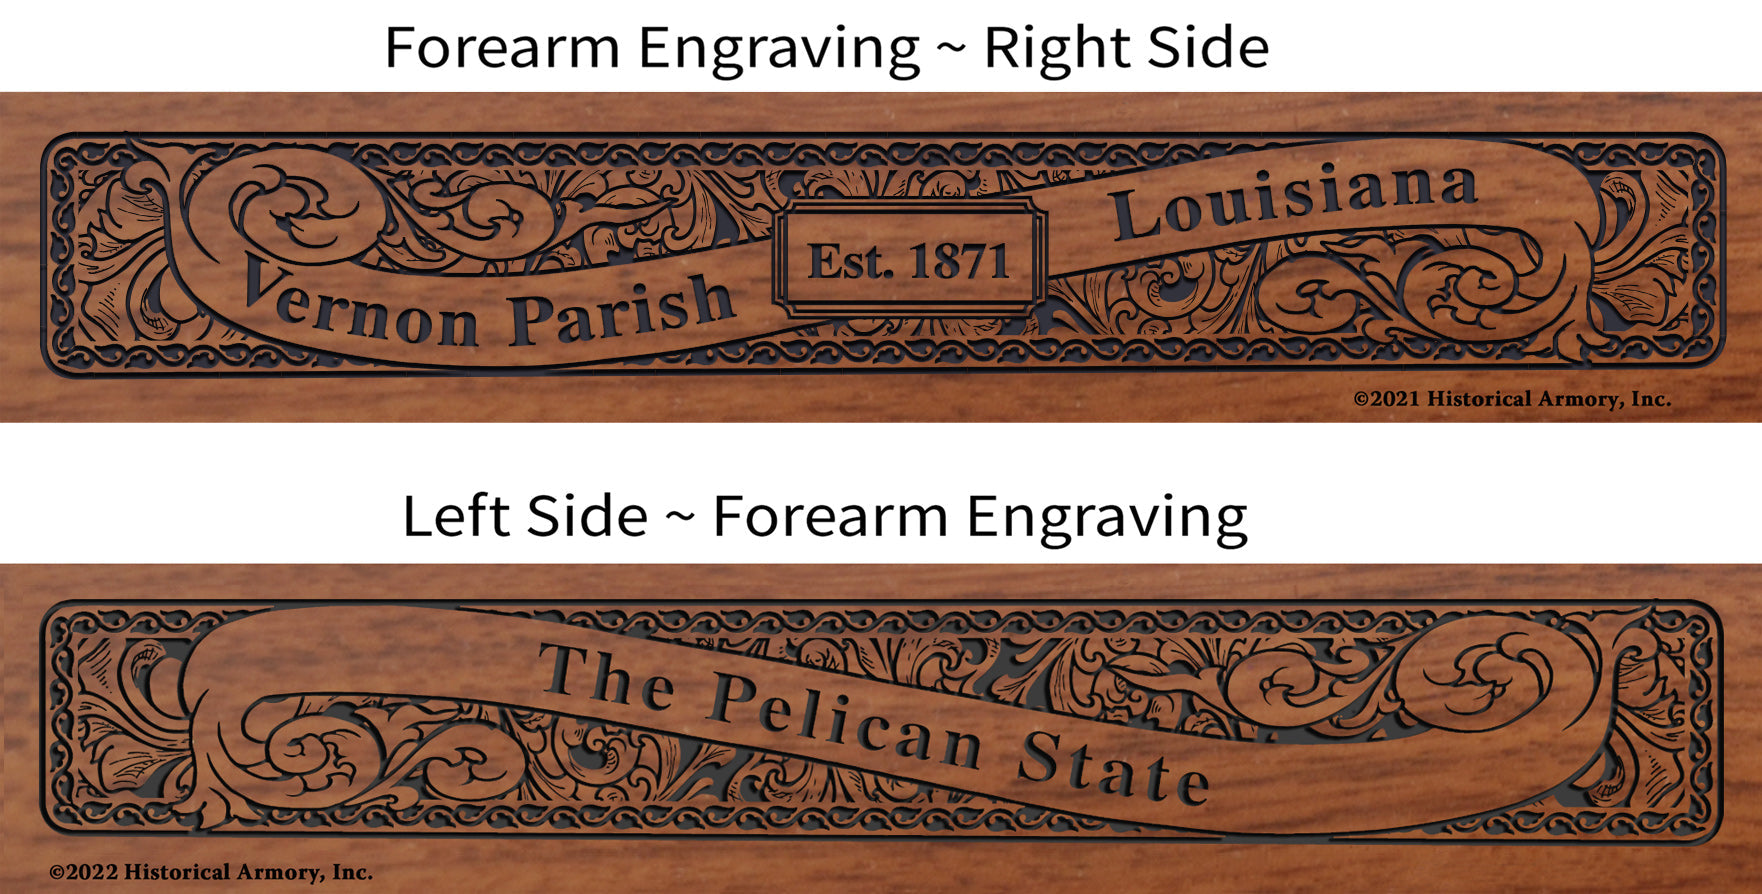 Vernon Parish Louisiana Engraved Rifle Forearm Right-Side